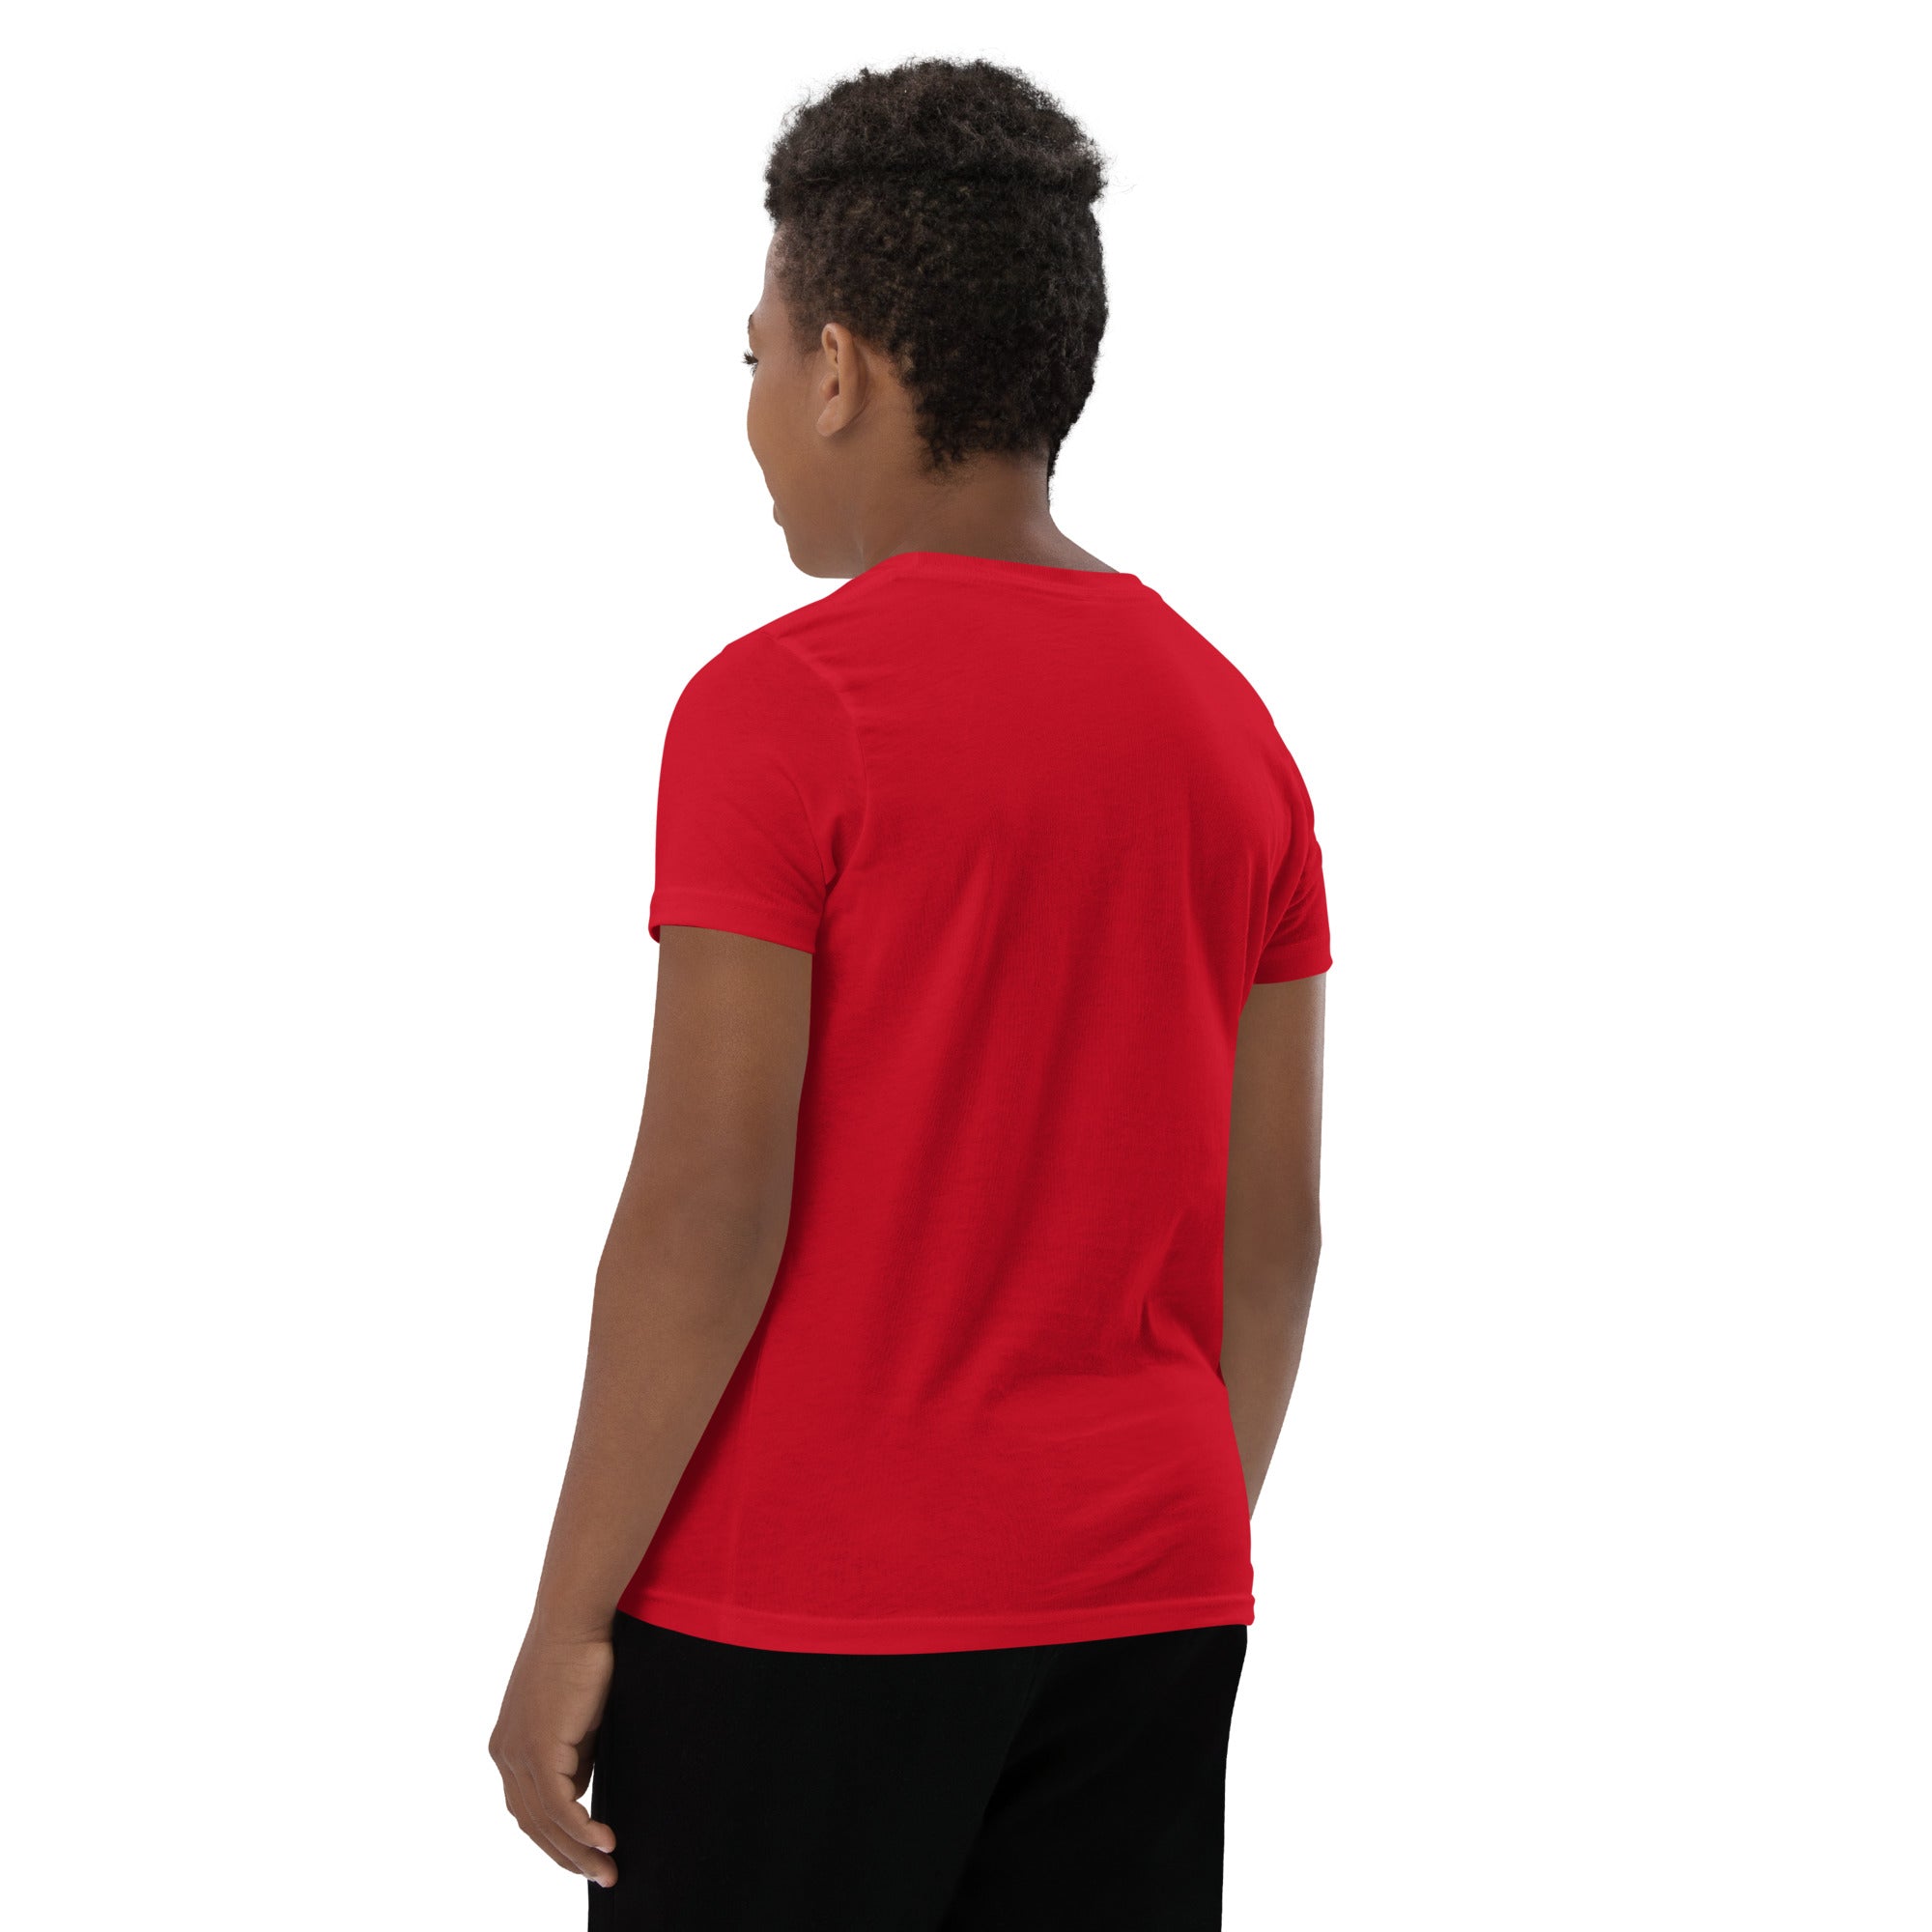 BG Logo White - Red Youth Short Sleeve T-Shirt